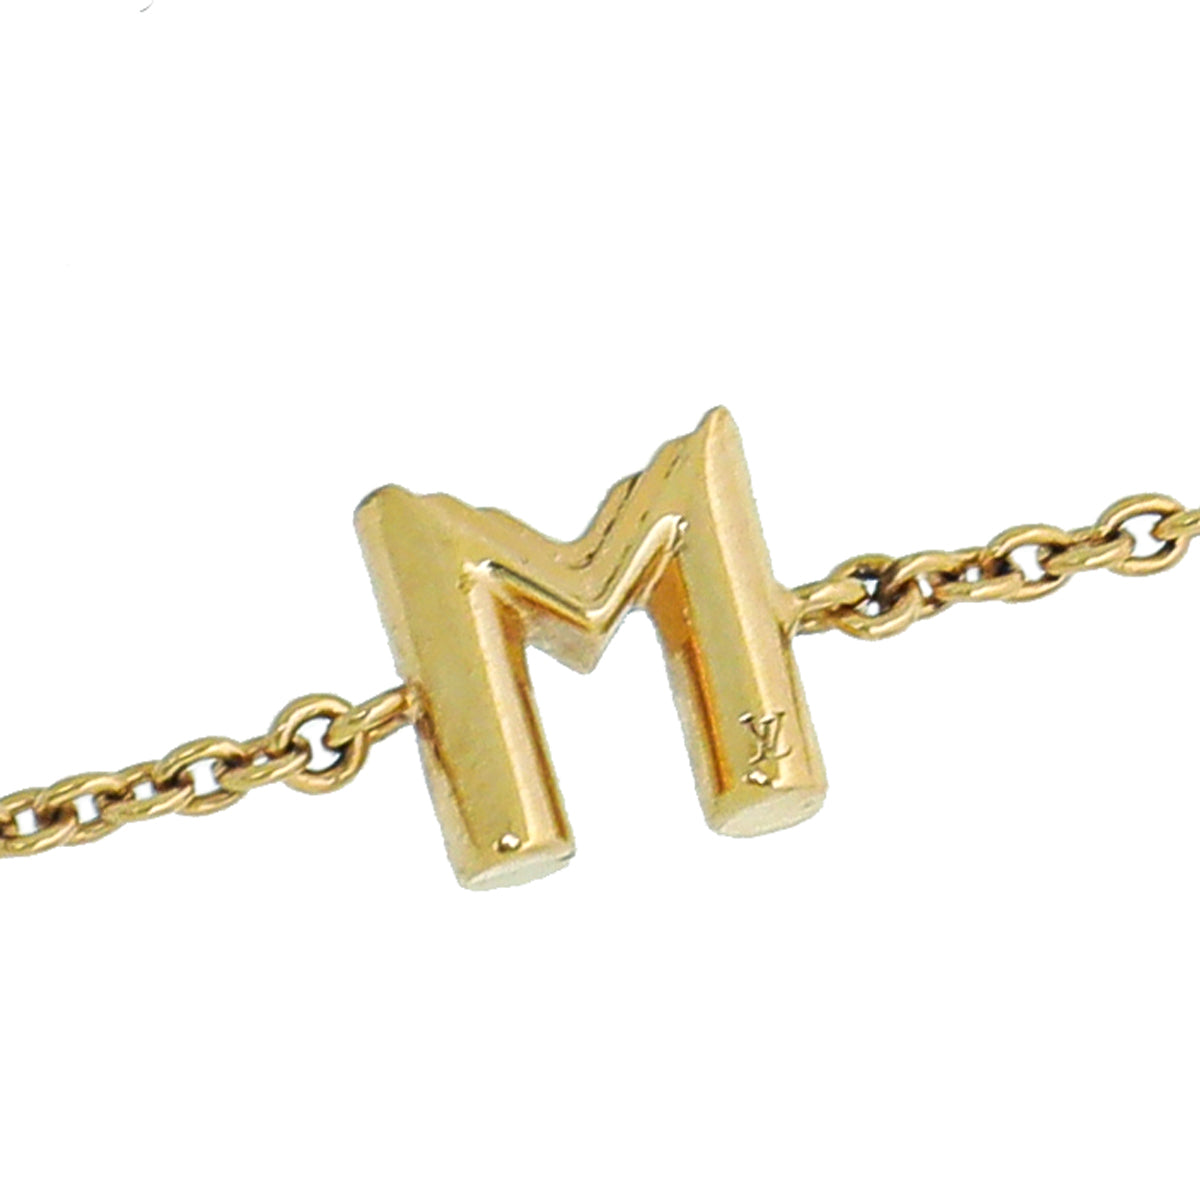 Louis Vuitton M1211A LV Iconic Heart Bracelet , Gold, One Size